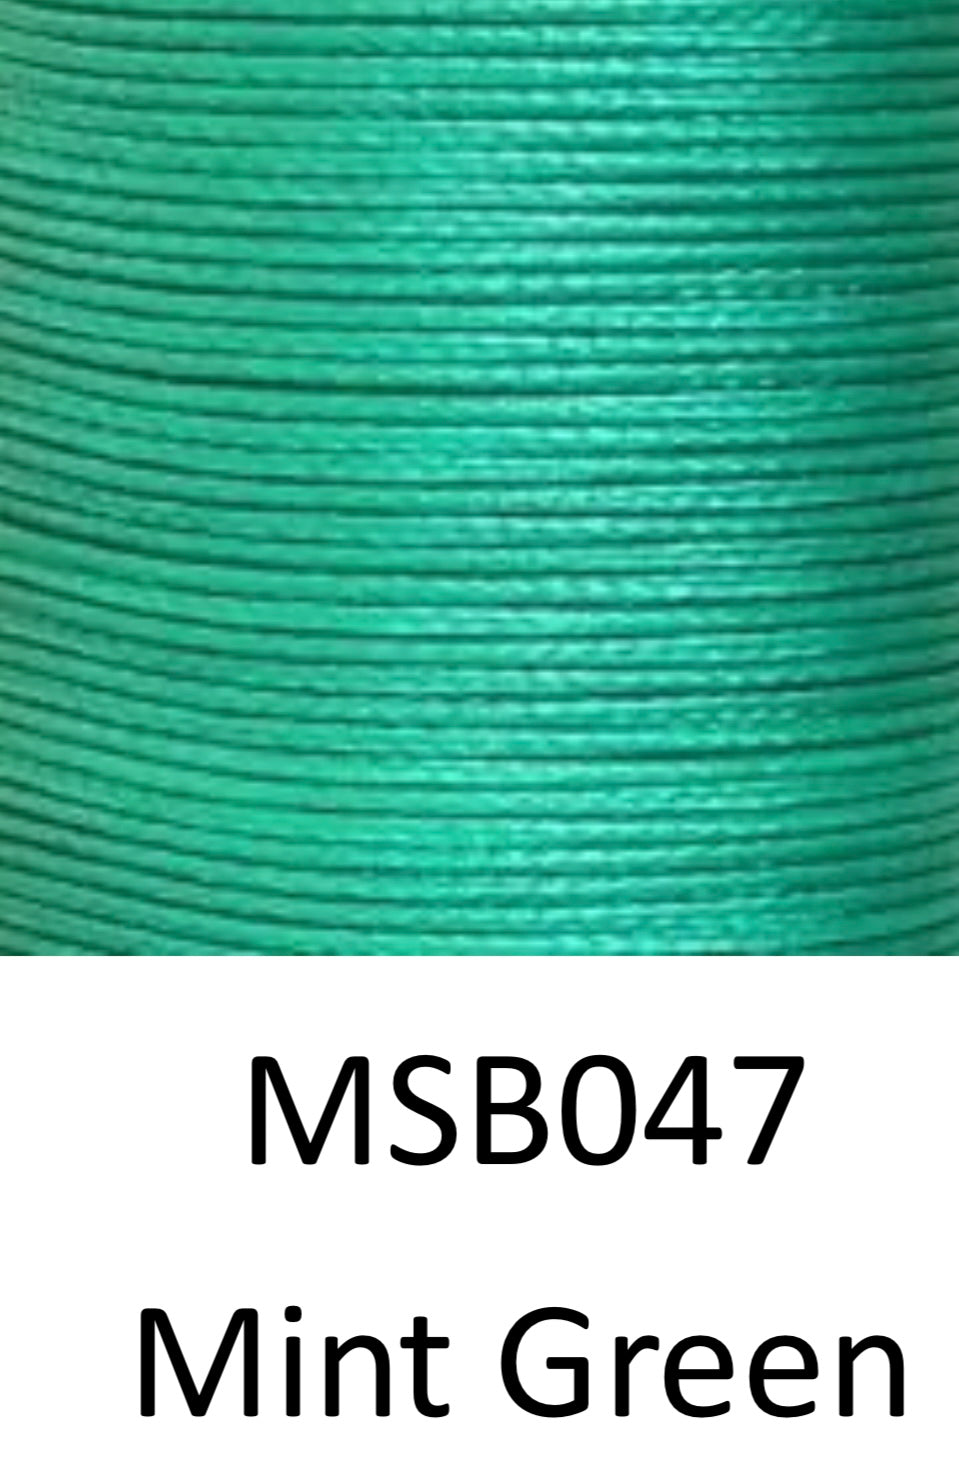 Xiange Braid polyester Garn | M50 0.55 mm | 50 m Spule